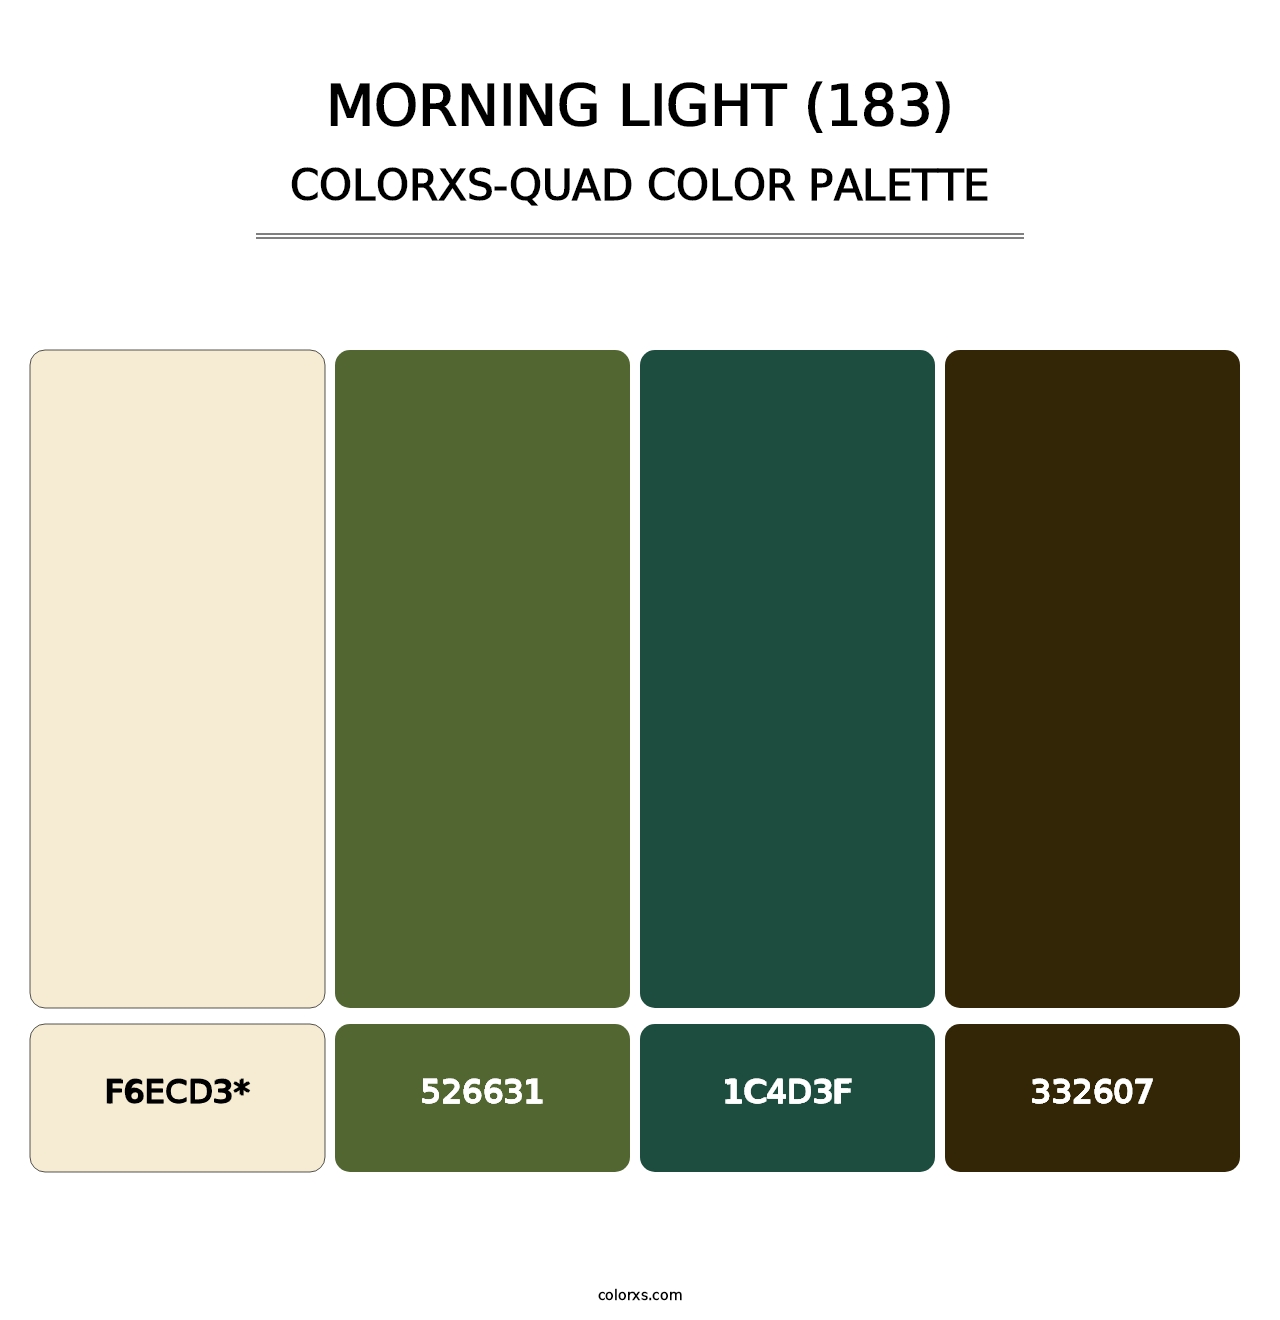 Morning Light (183) - Colorxs Quad Palette